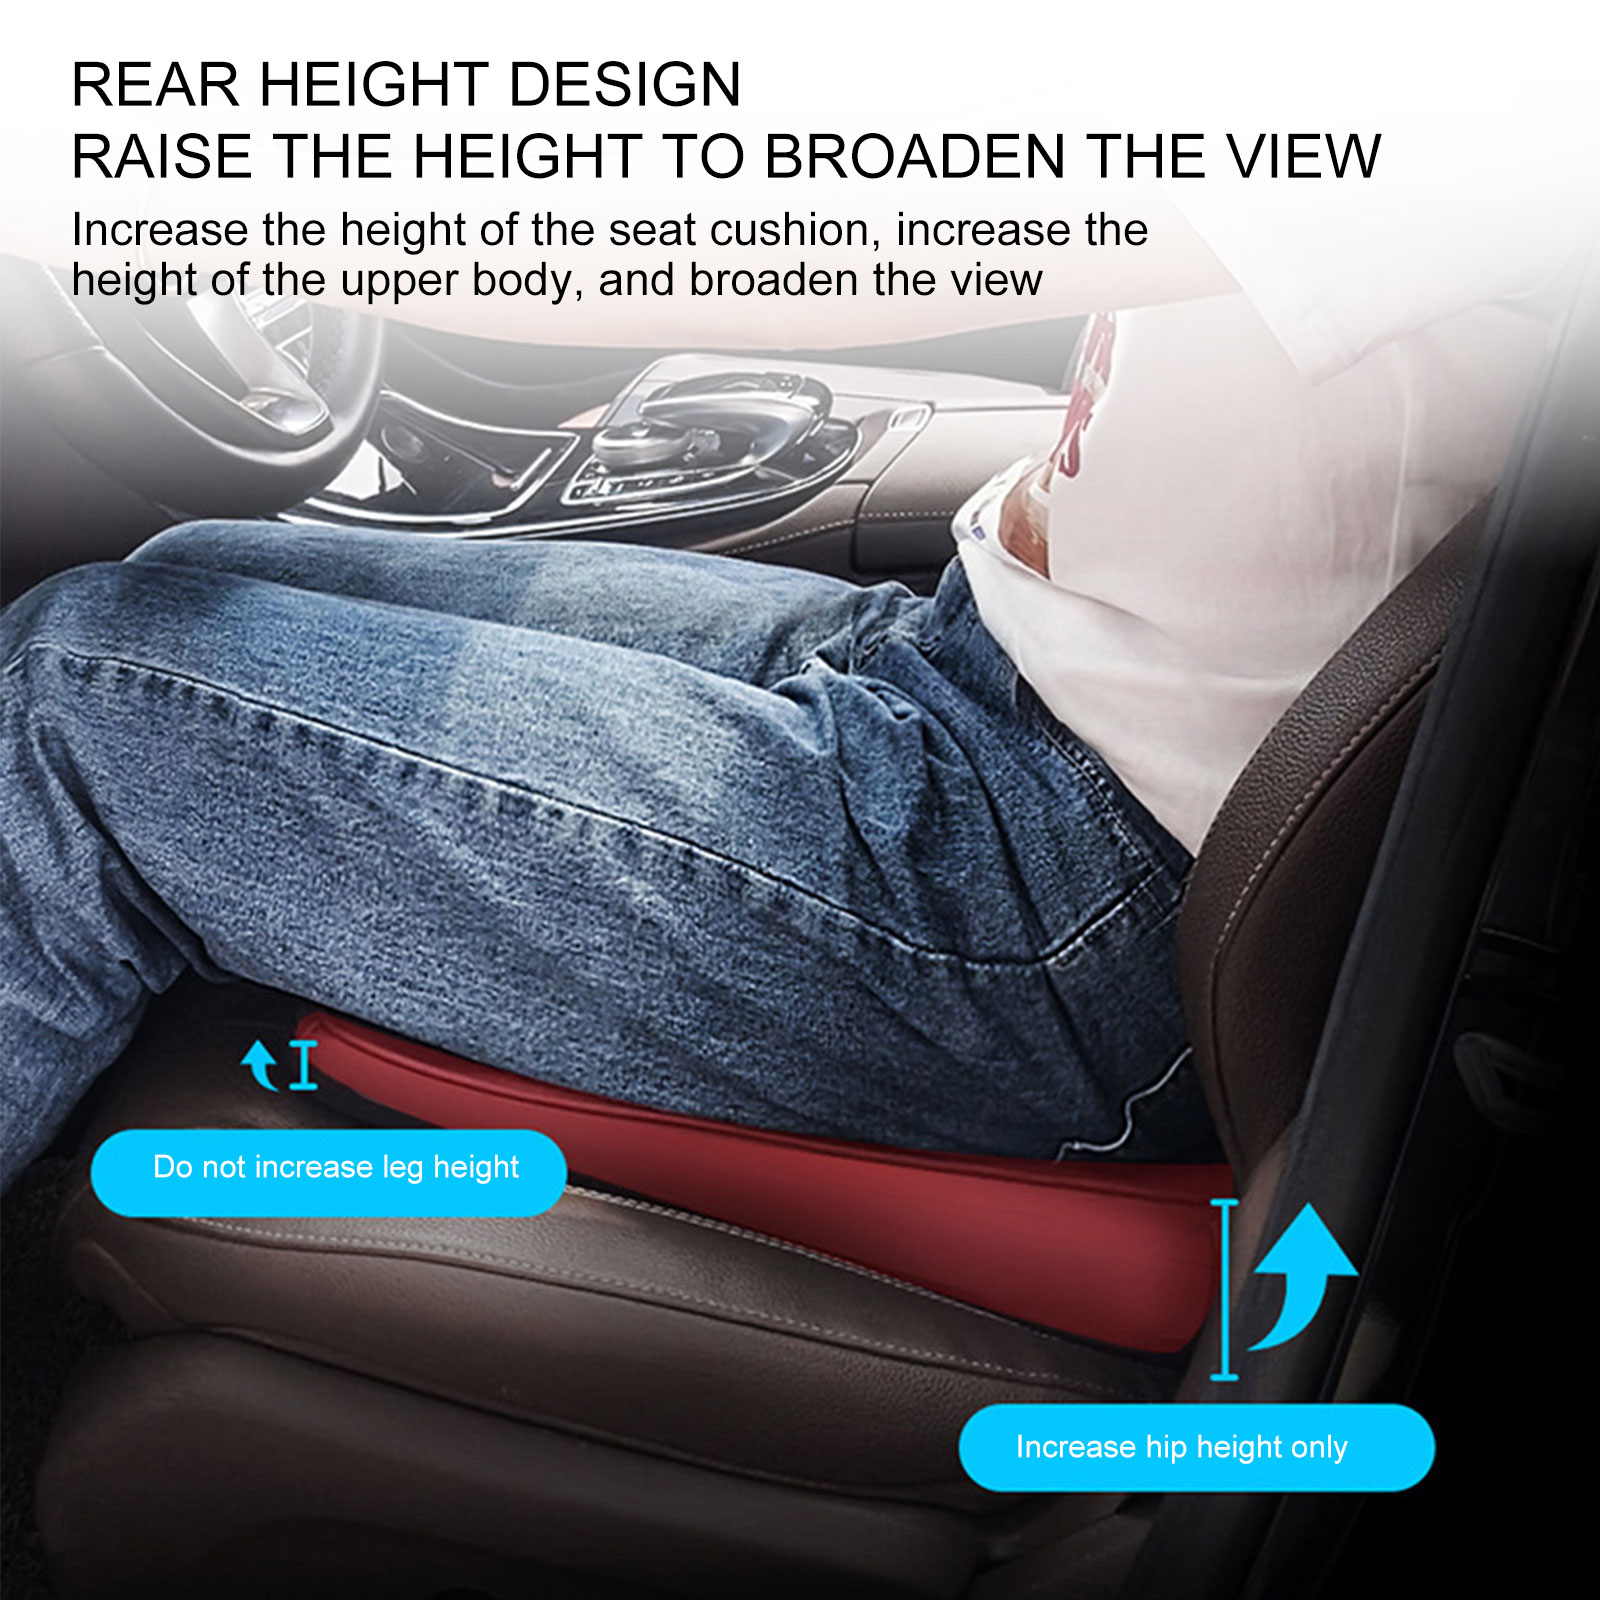 Car Booster Seat Cushion For Driver Hip Pain Raised Memory Foam